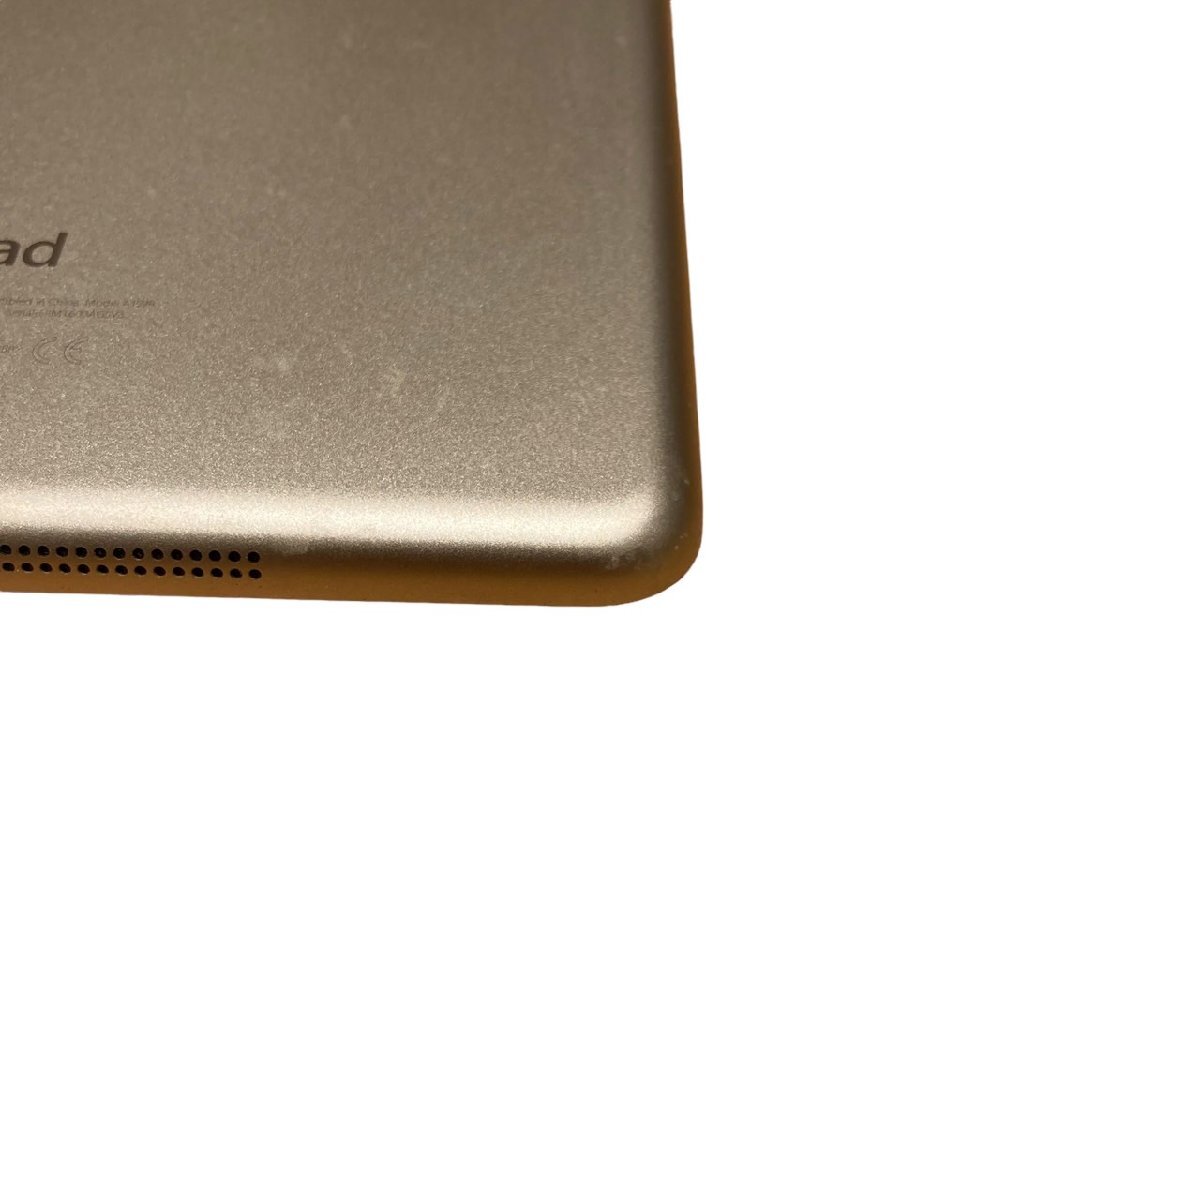 Apple アップル ipad mini 3 16GB ゴールド系の画像6